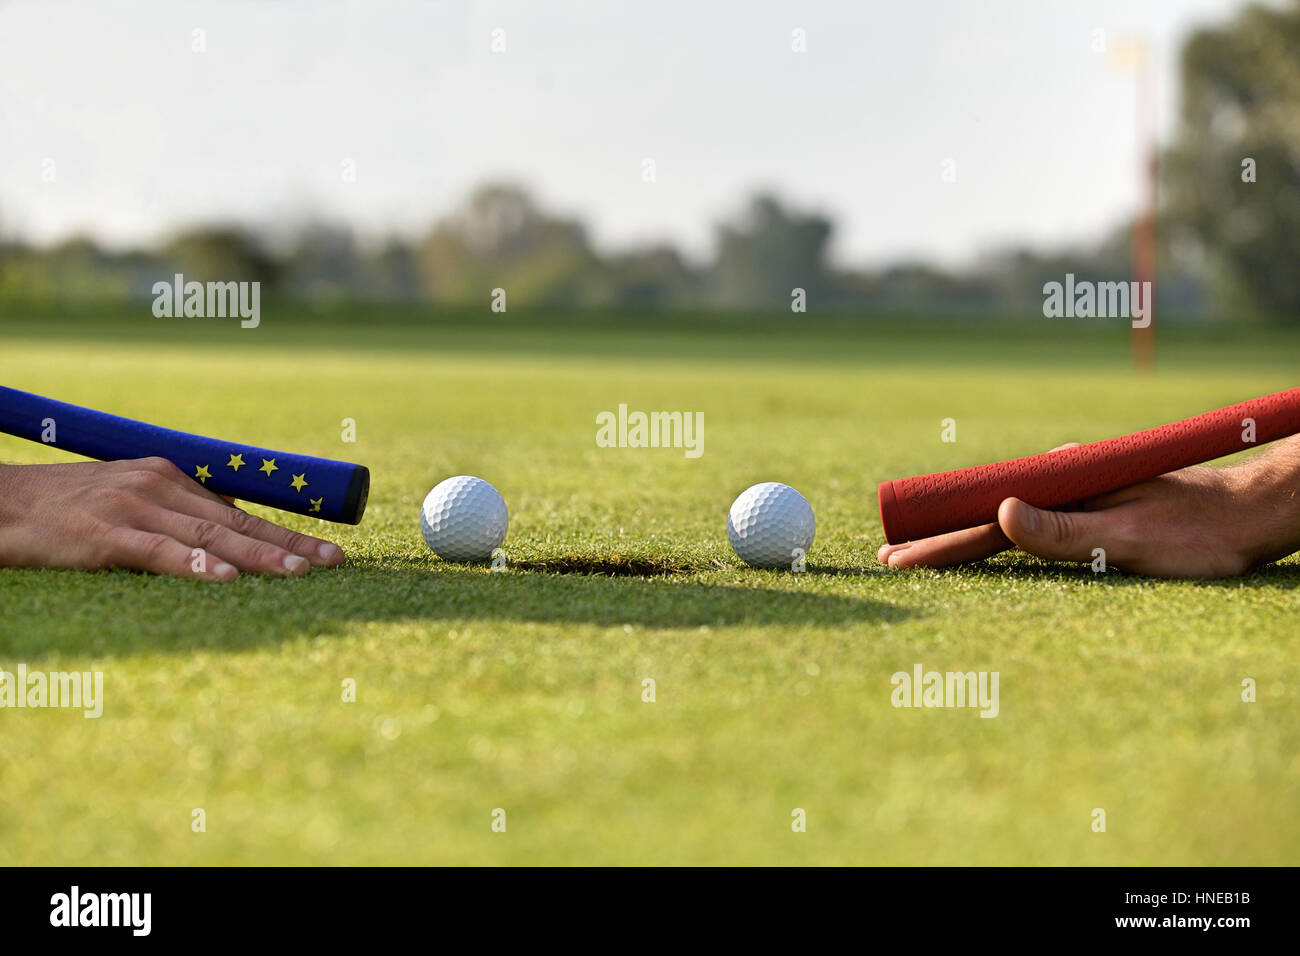 Human hands using golf balls to play pool Stock Photo